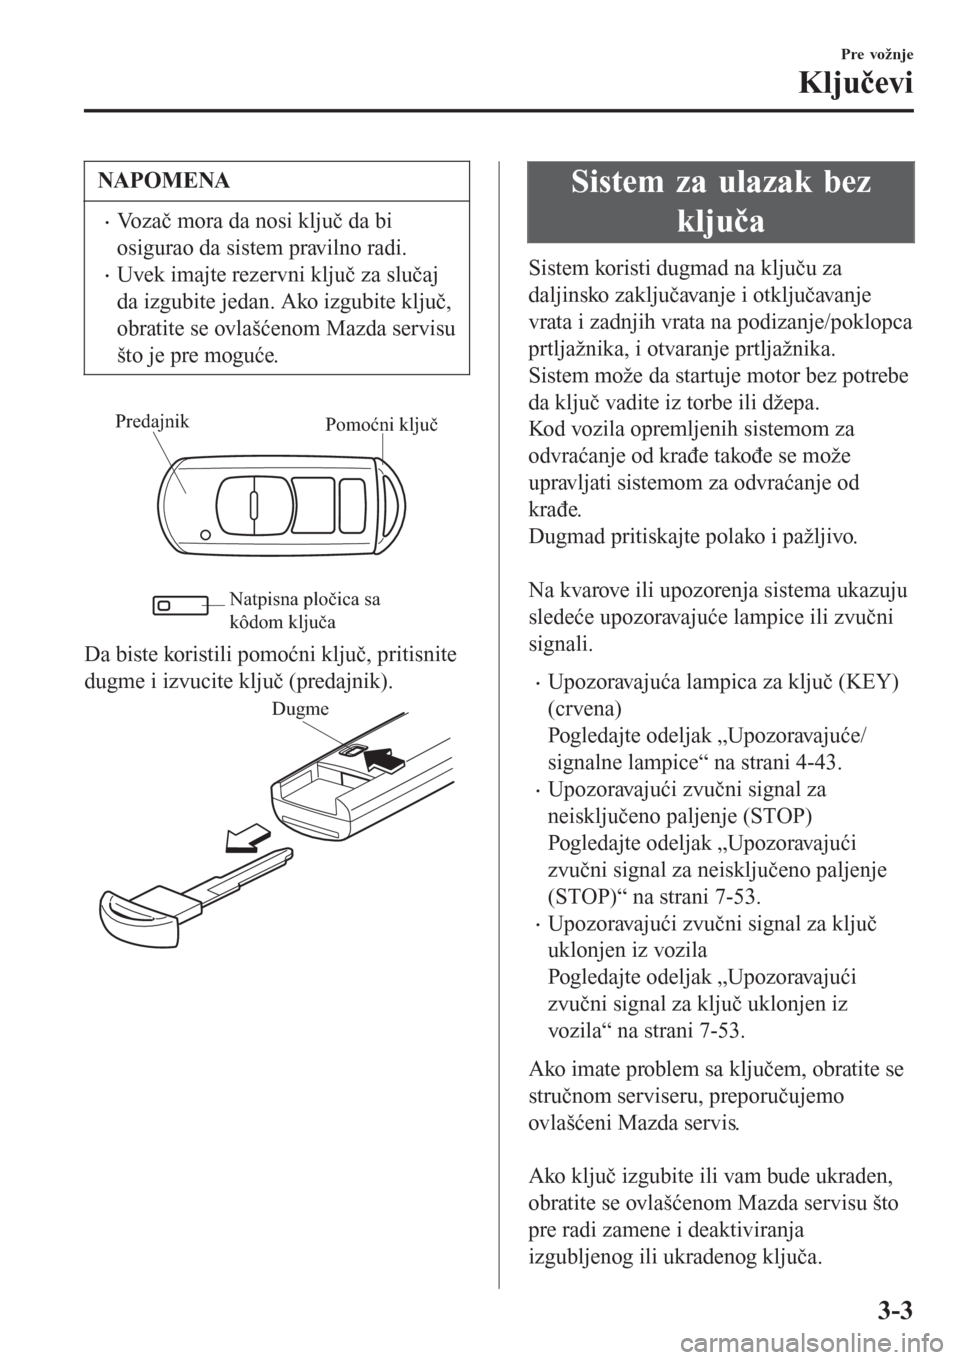 MAZDA MODEL 3 HATCHBACK 2015  Korisničko uputstvo (in Serbian) NAPOMENA
•Vozač mora da nosi ključ da bi
osigurao da sistem pravilno radi.
•Uvek imajte rezervni ključ za slučaj
da izgubite jedan. Ako izgubite ključ,
obratite se ovlašćenom Mazda servisu
